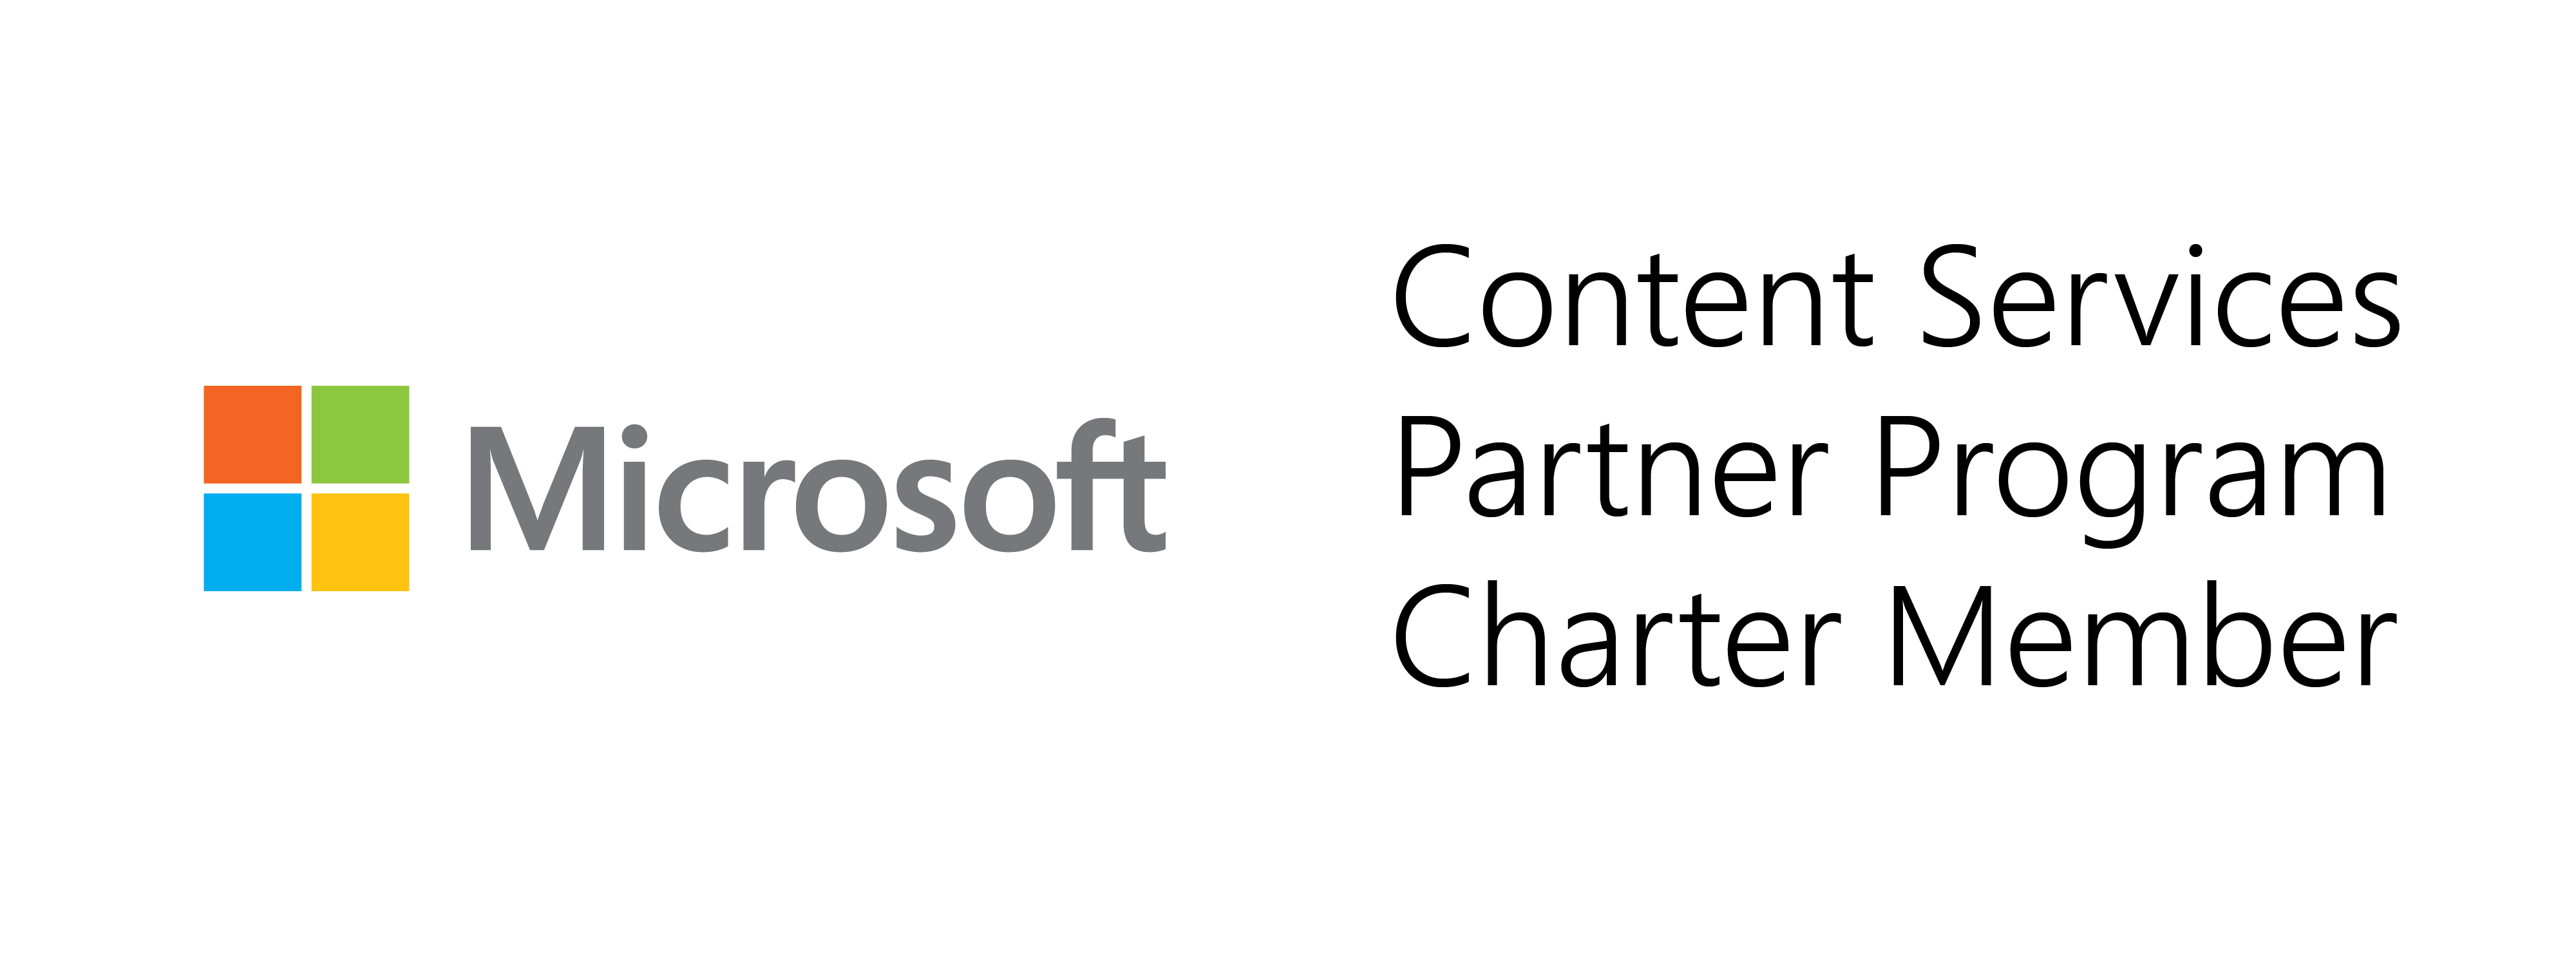 Microsoft Content Serv Charter Member White_4000x1500-1